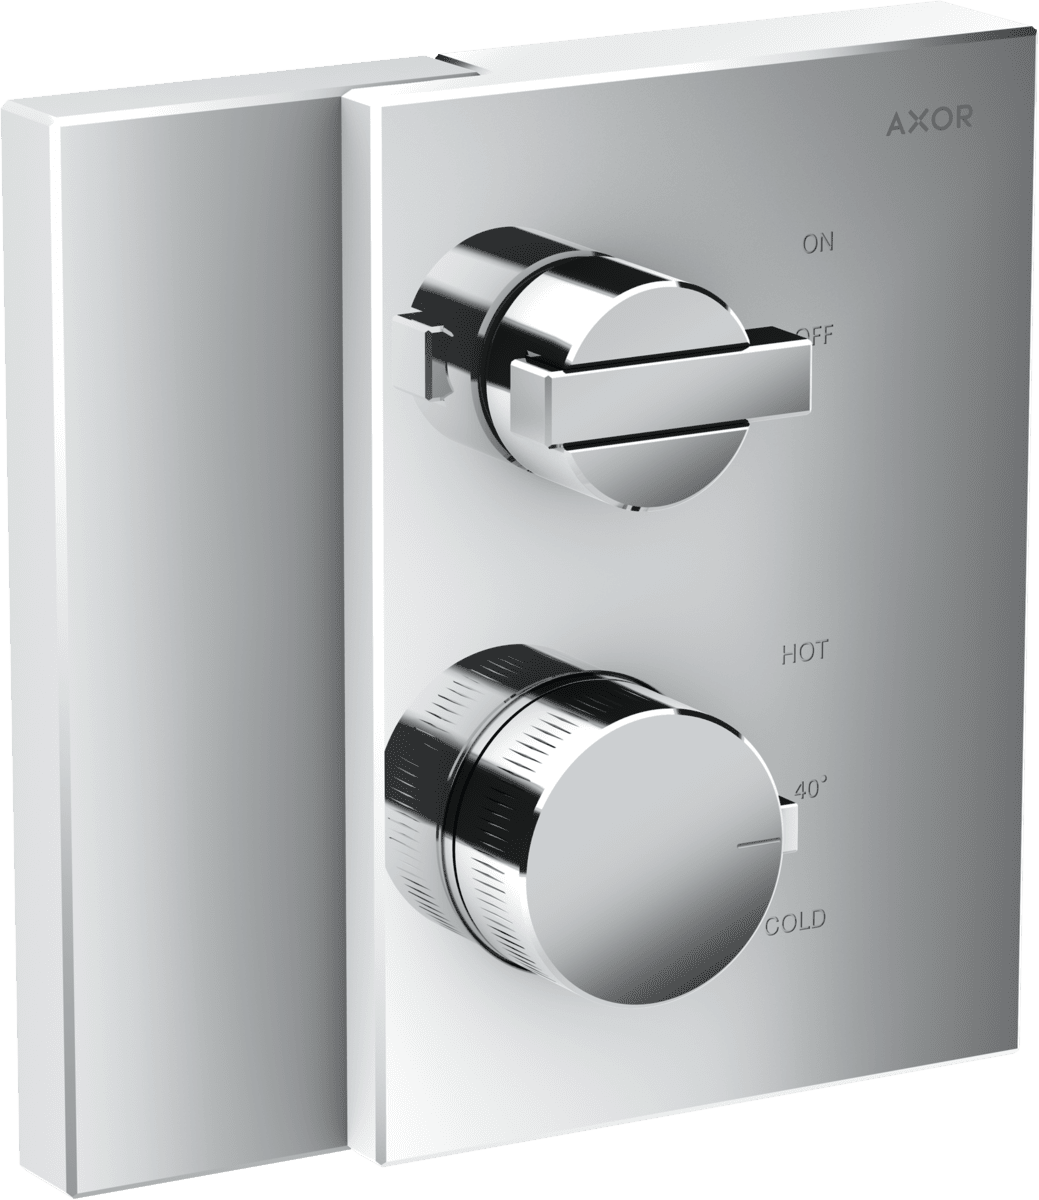 HANSGROHE AXOR Edge Termostat ankastre montaj için açma kapama valfi ile #46750000 - Krom resmi